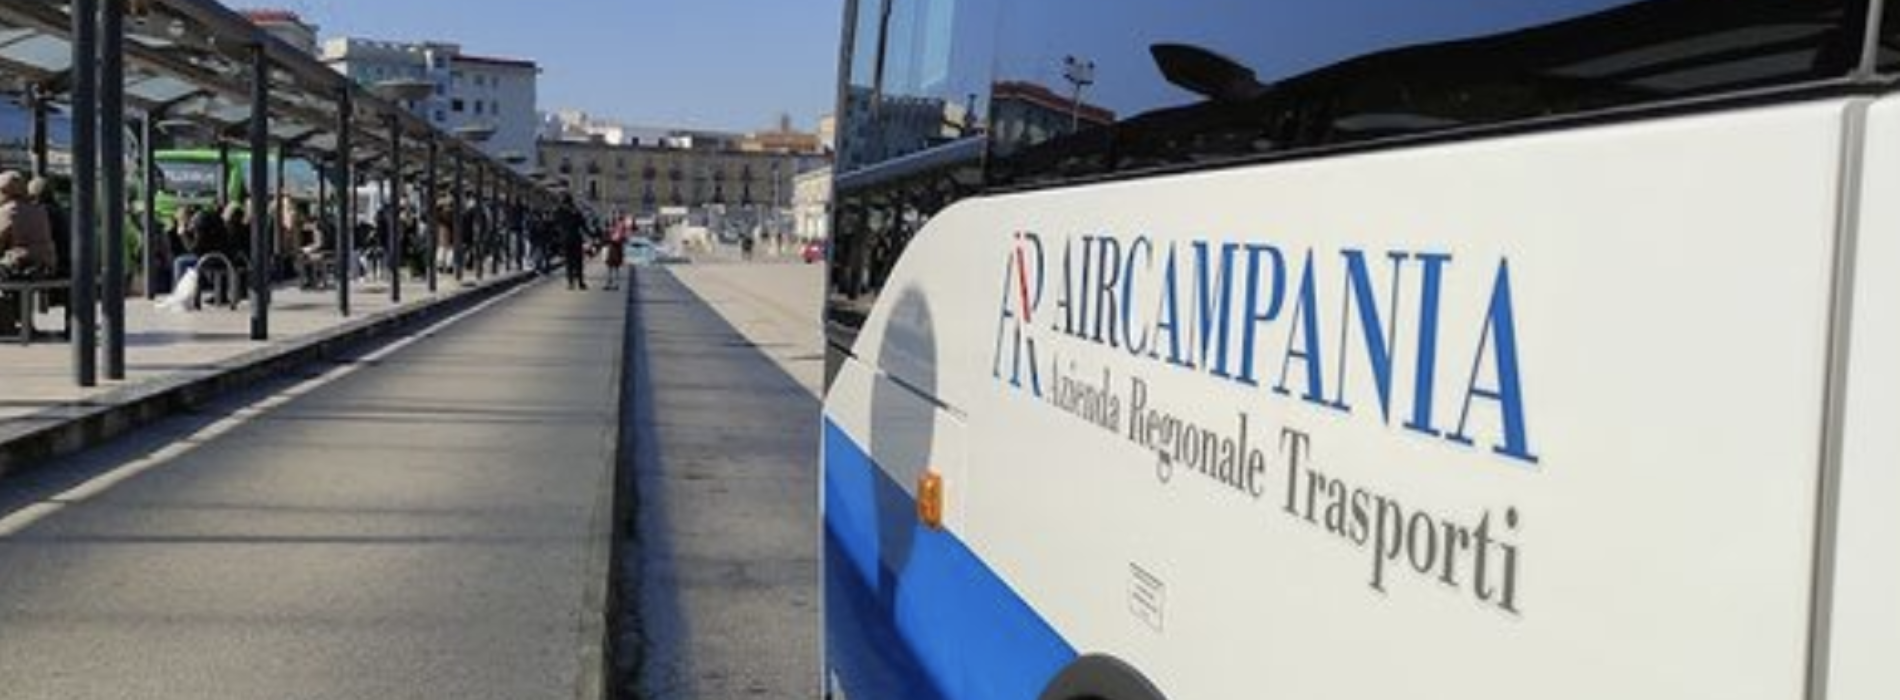 Air Campania, l’azienda aderisce alla campagna di donazione organi